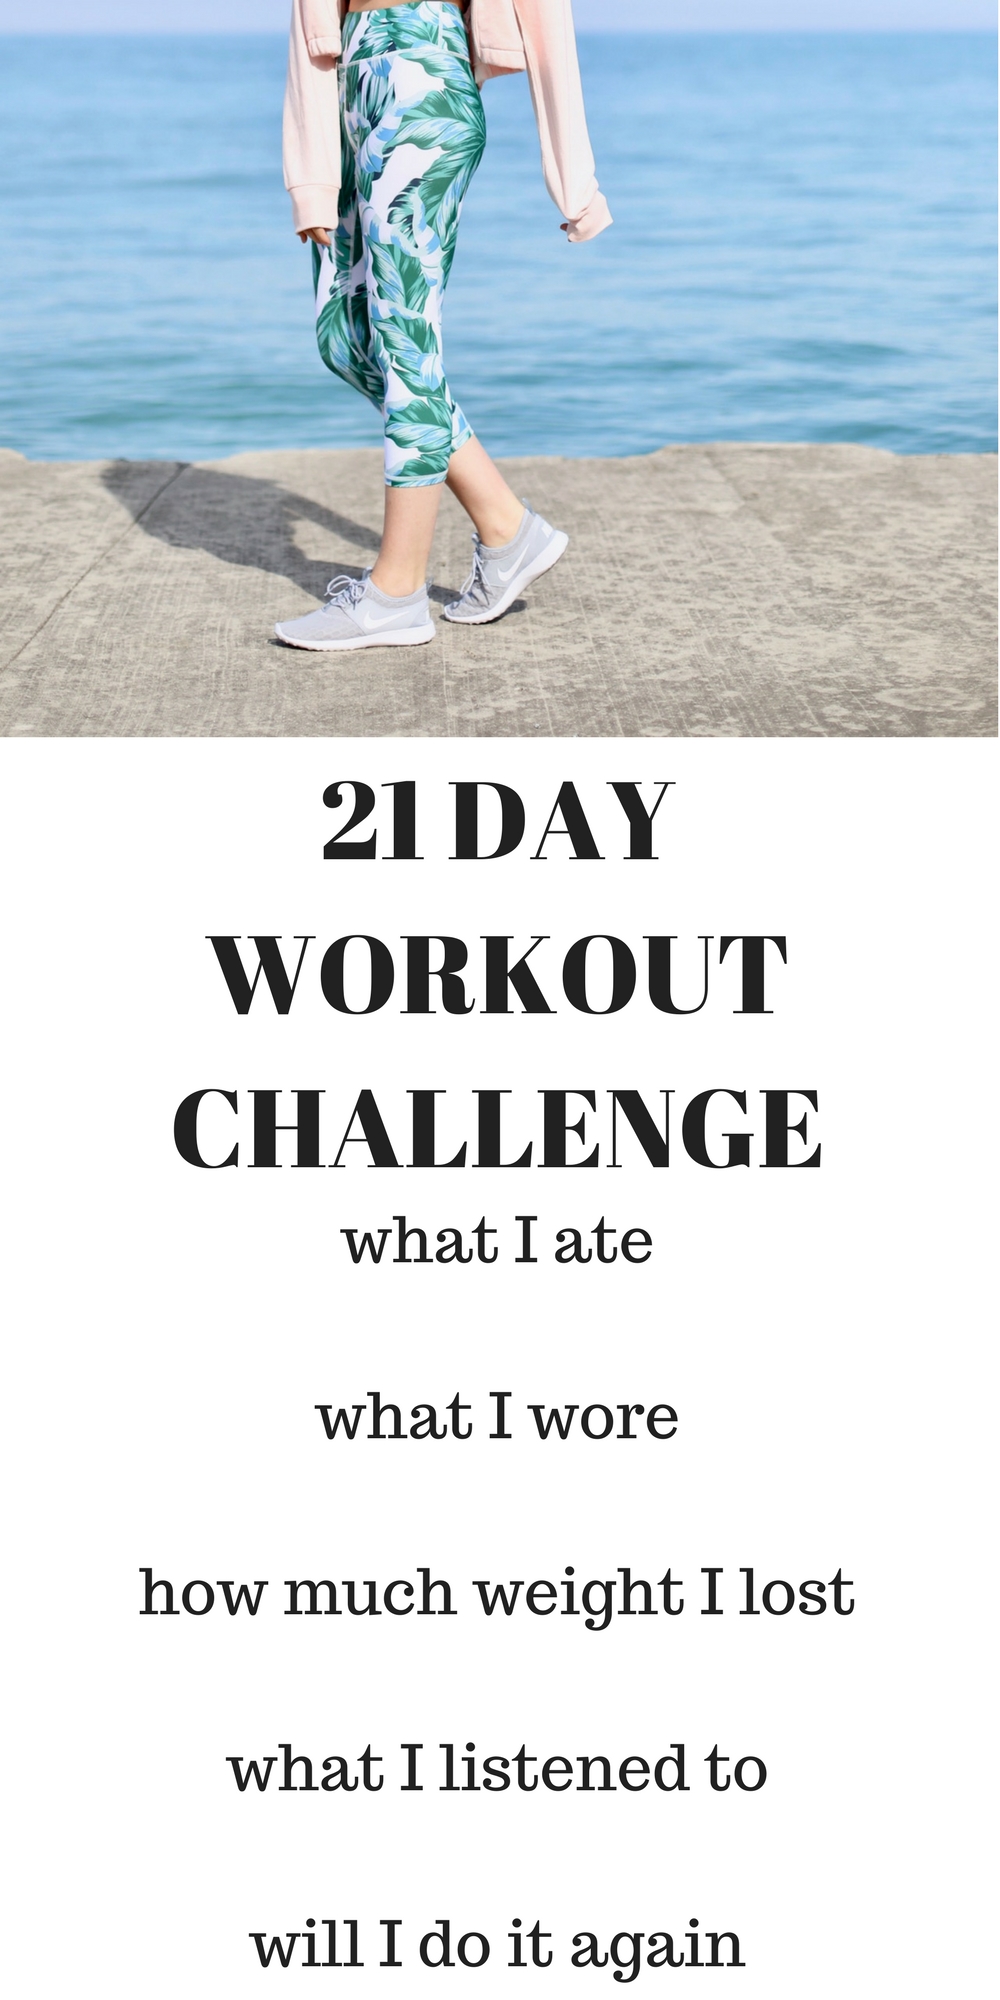 21 DAYWORKOUT CHALLENGE